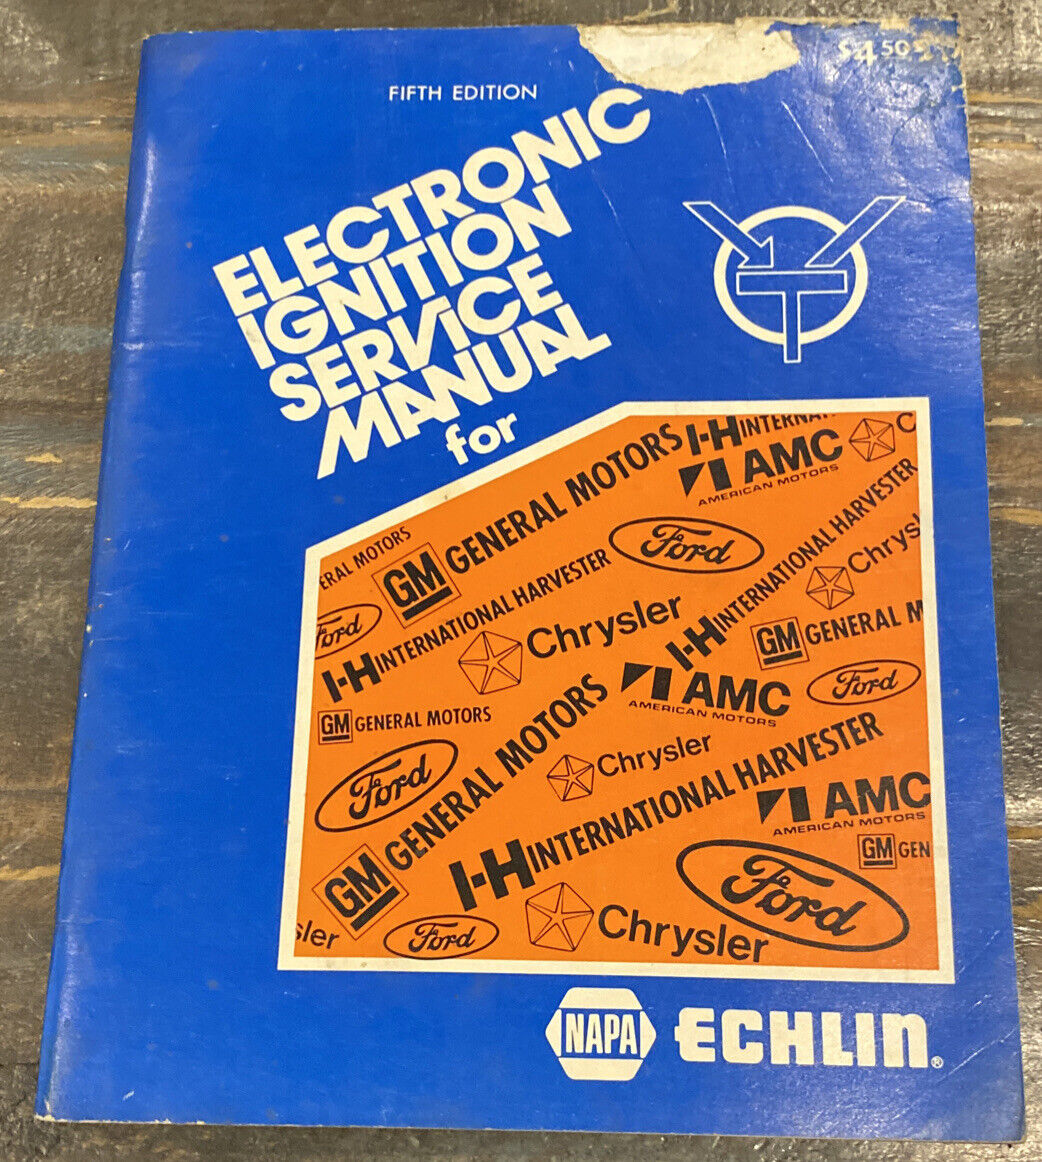 1979 NAPA ECHLIN Electronic Ignition Service Manual Ford, Chrysler, AMC, GM, IH